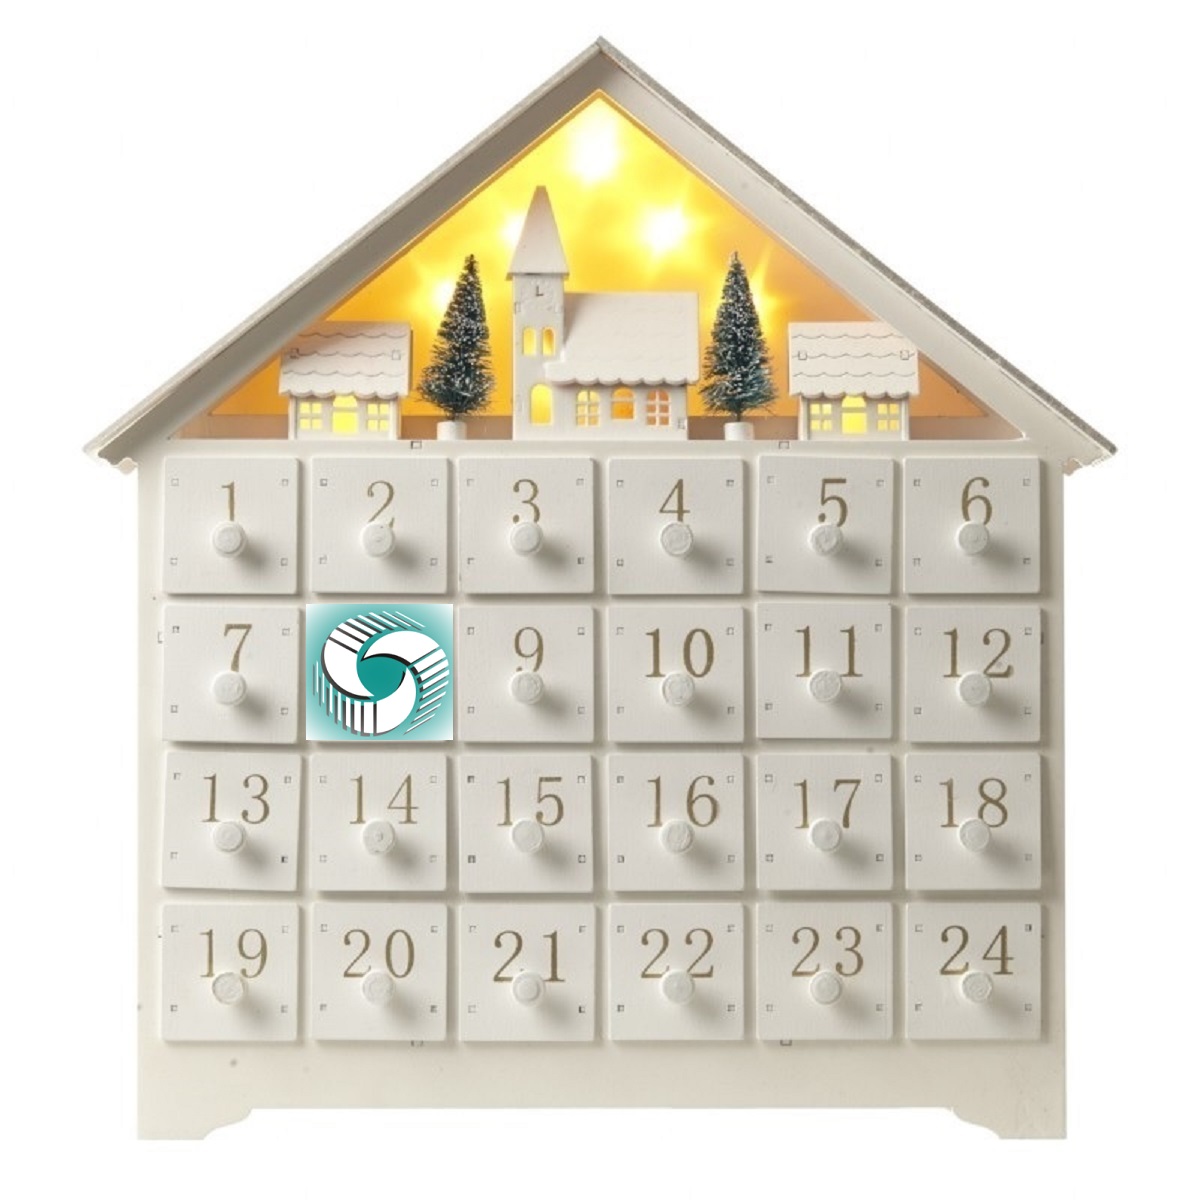 Day 8 – Frontier’s Advent Calendar